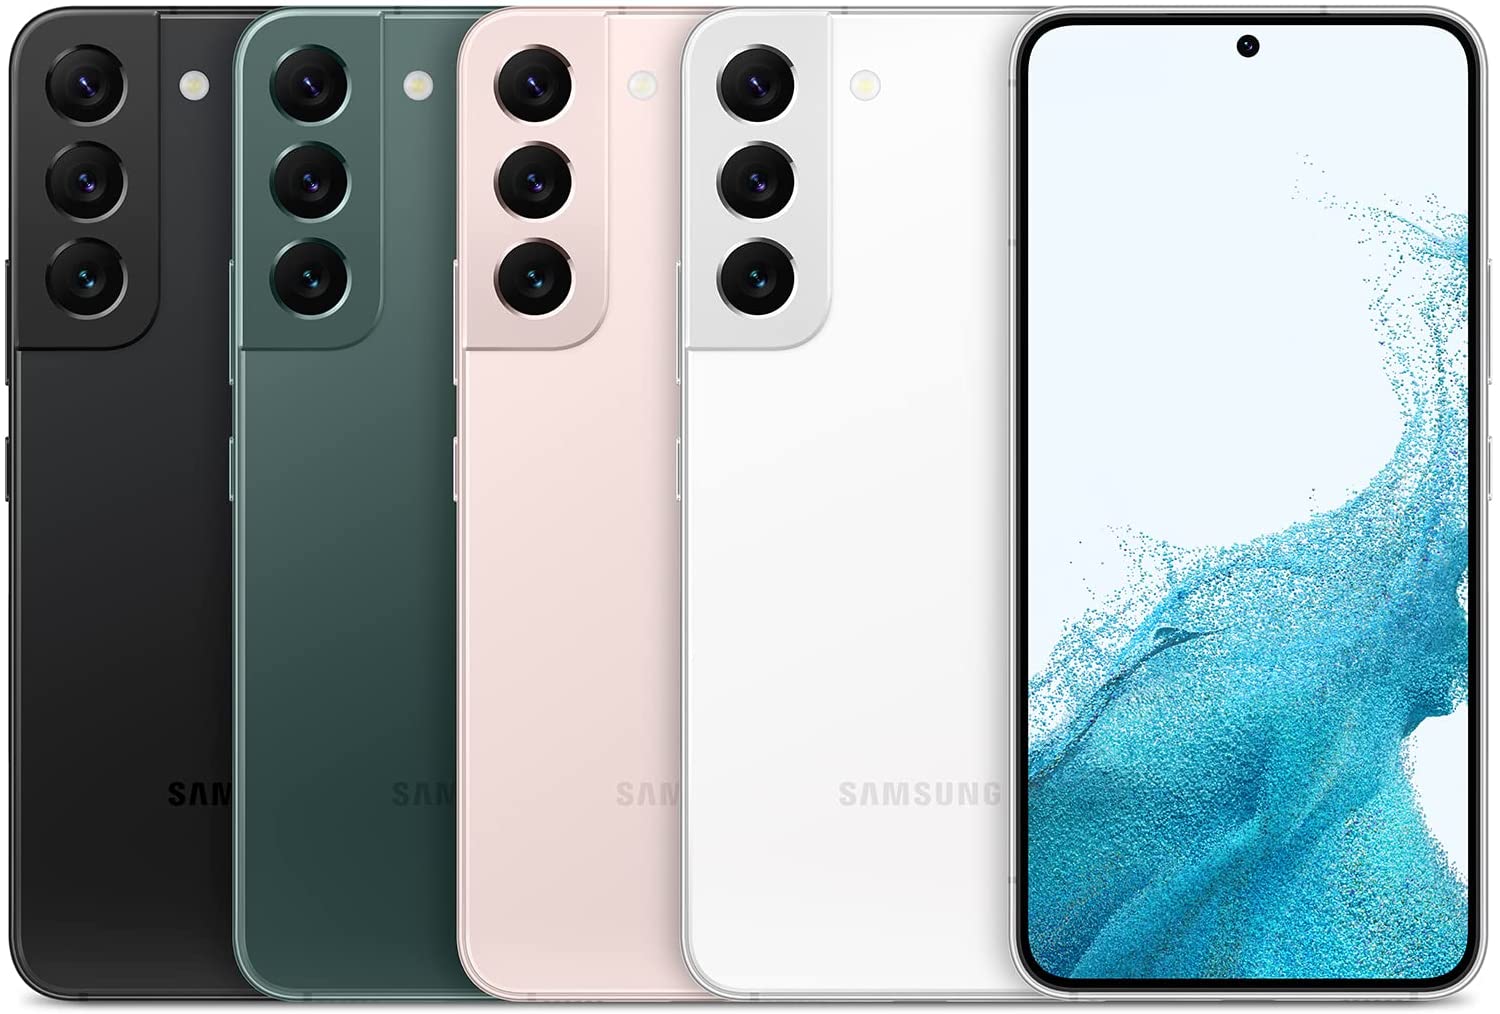 Samsung Galaxy S22 phone colors